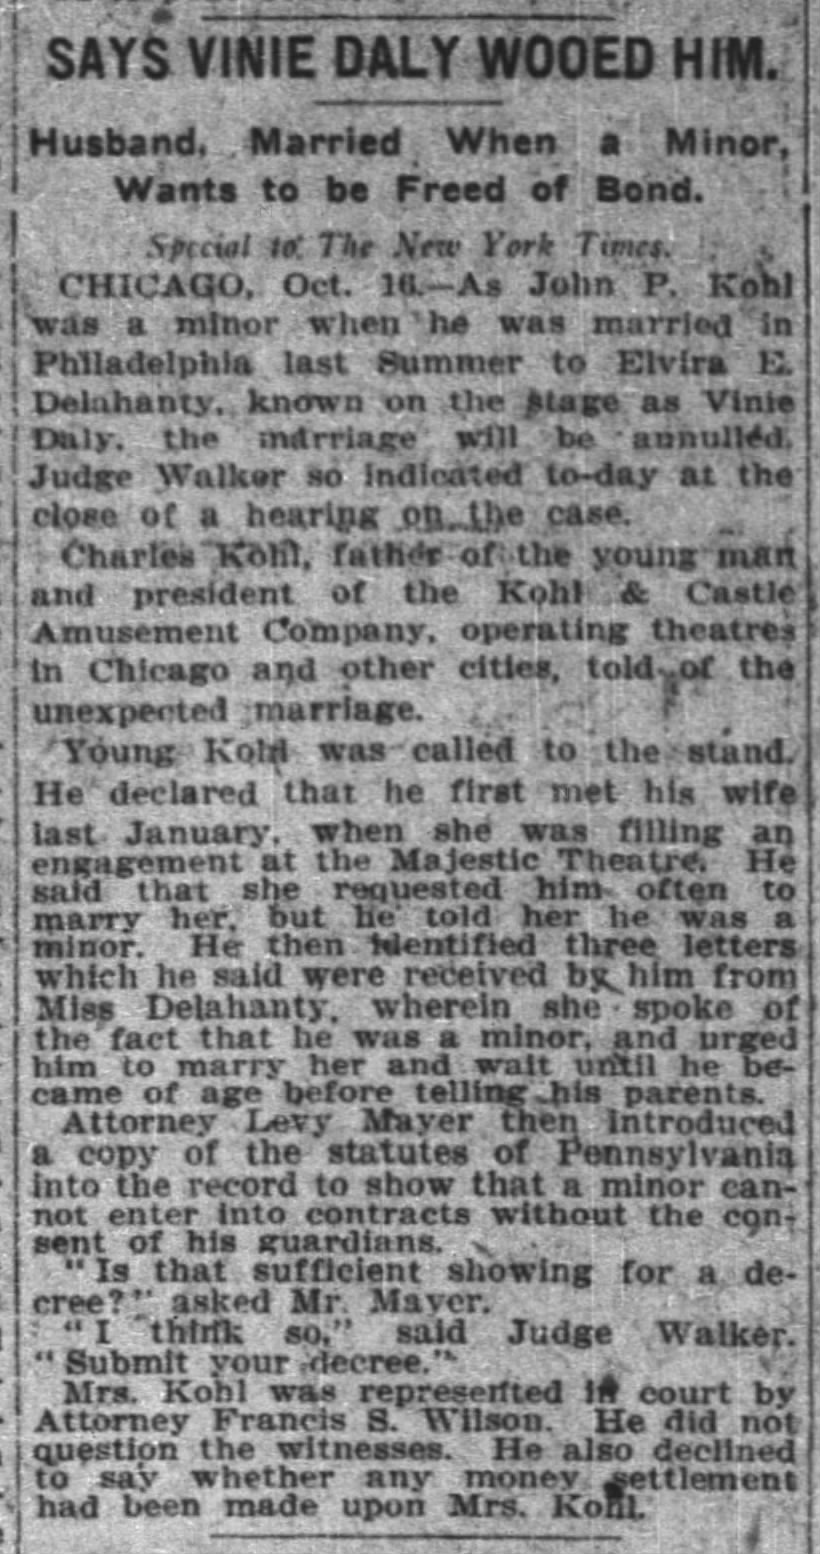 Elvira E Delahanty & J P Kohl
New York Times
Oct 17, 1909 Page Ten
